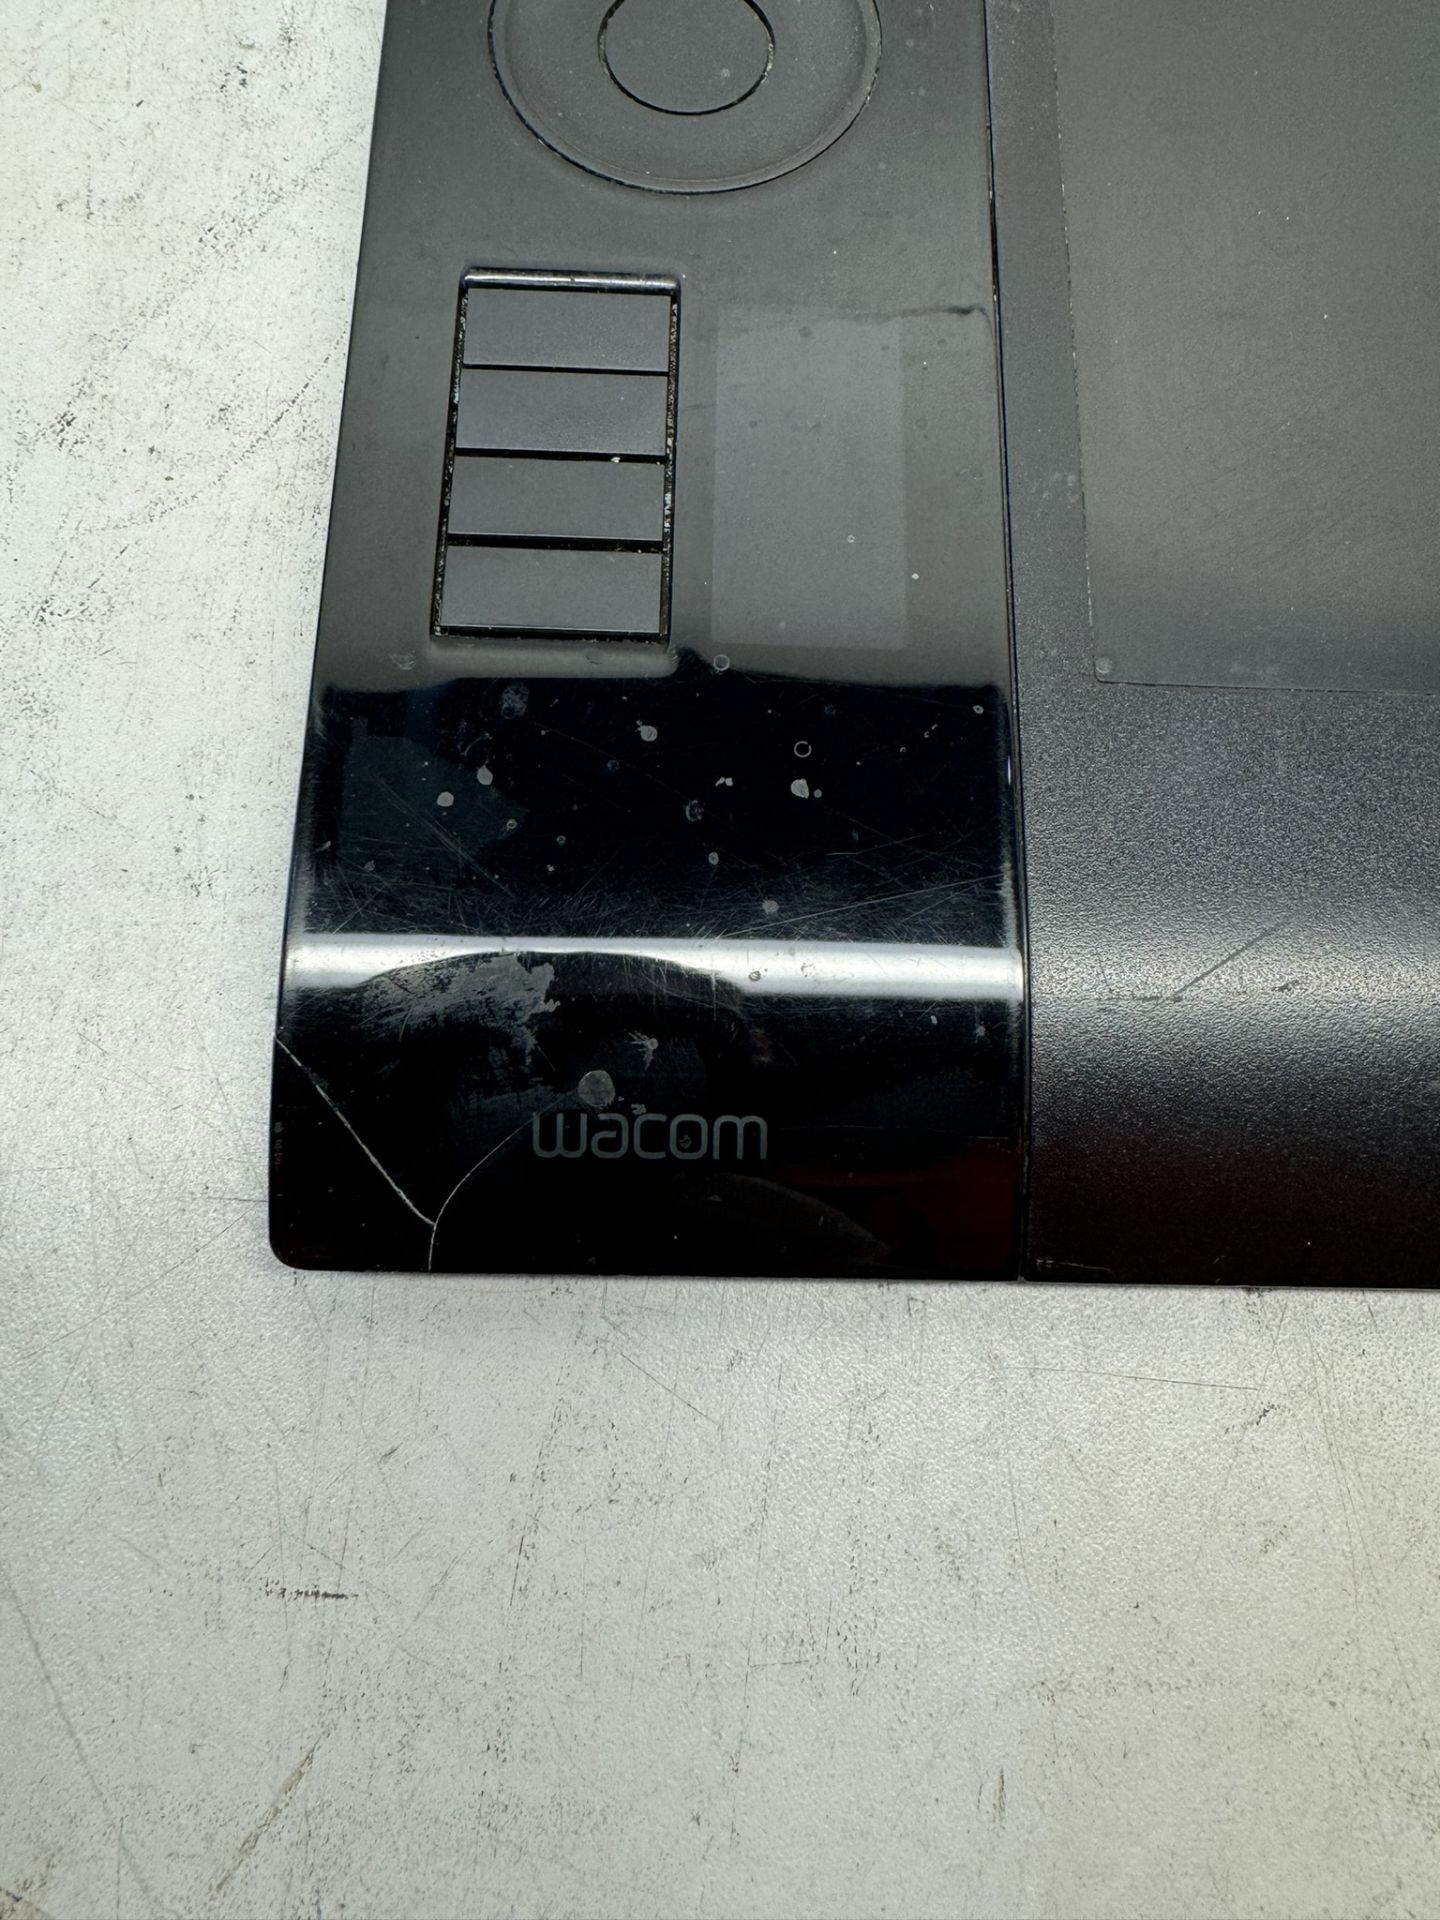 Wacom Intuos4 PTK-640 Medium A5 Graphics Tablet - Image 2 of 3